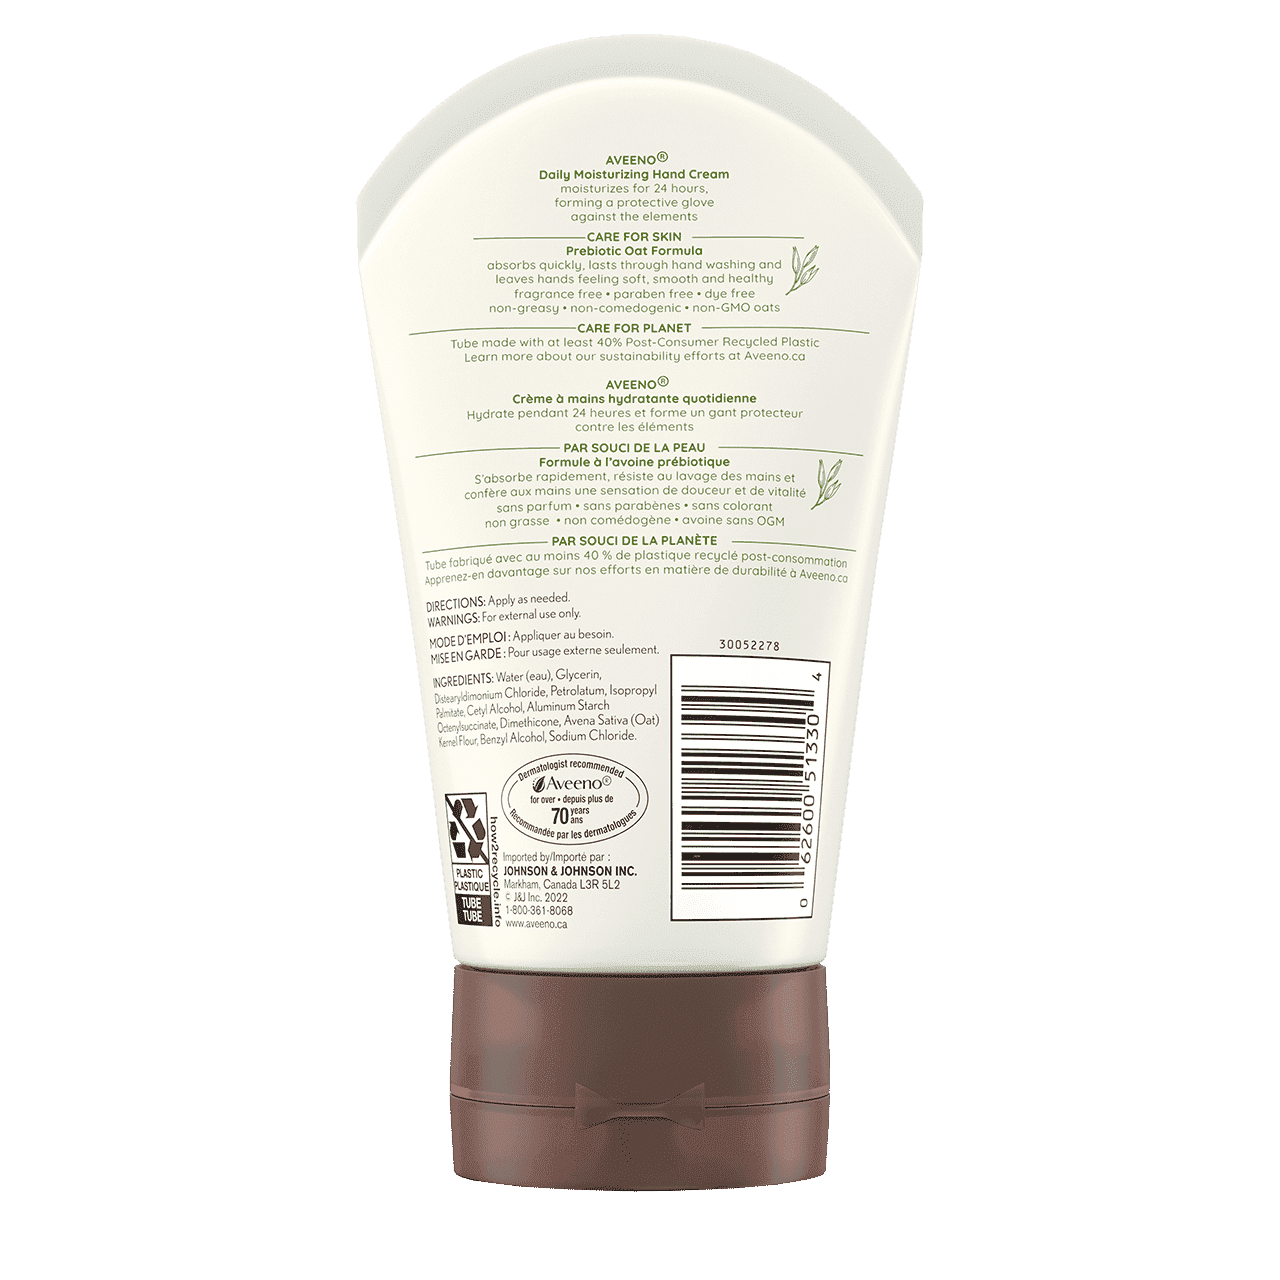 AVEENO® Daily Moisturizing Hand Cream, 97ml squeeze tube, back label